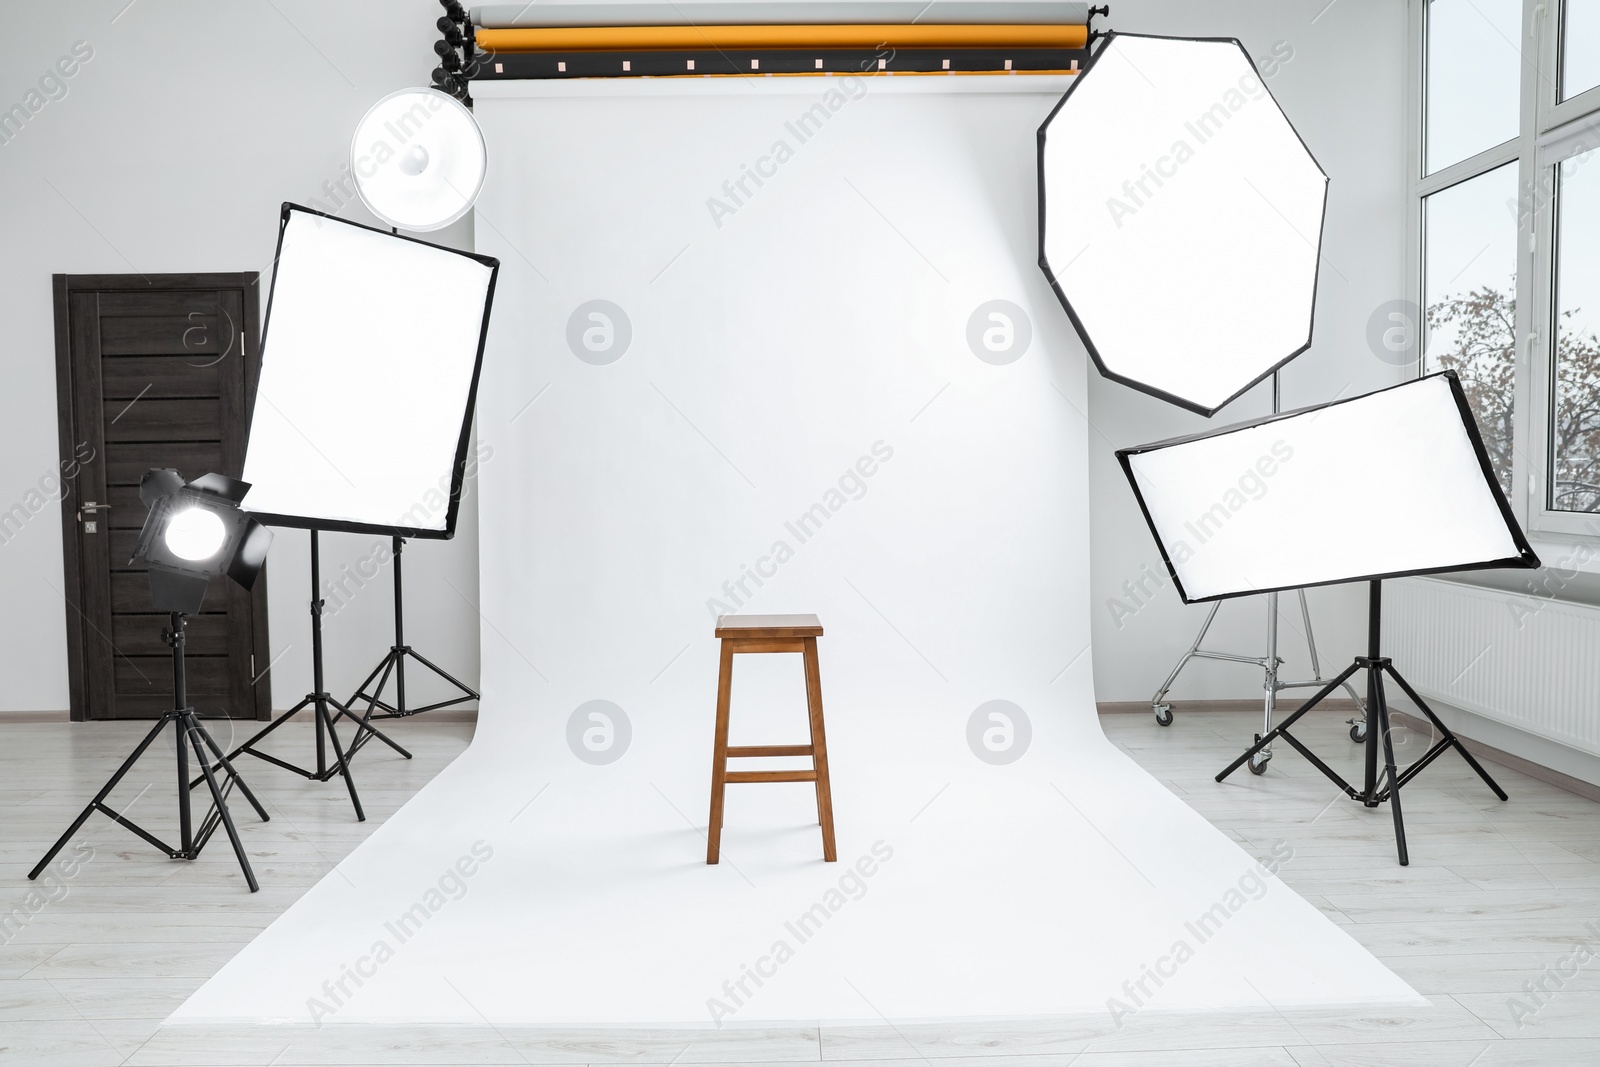 Photo of Interior of modern photo studio with bar stool and professional lighting equipment